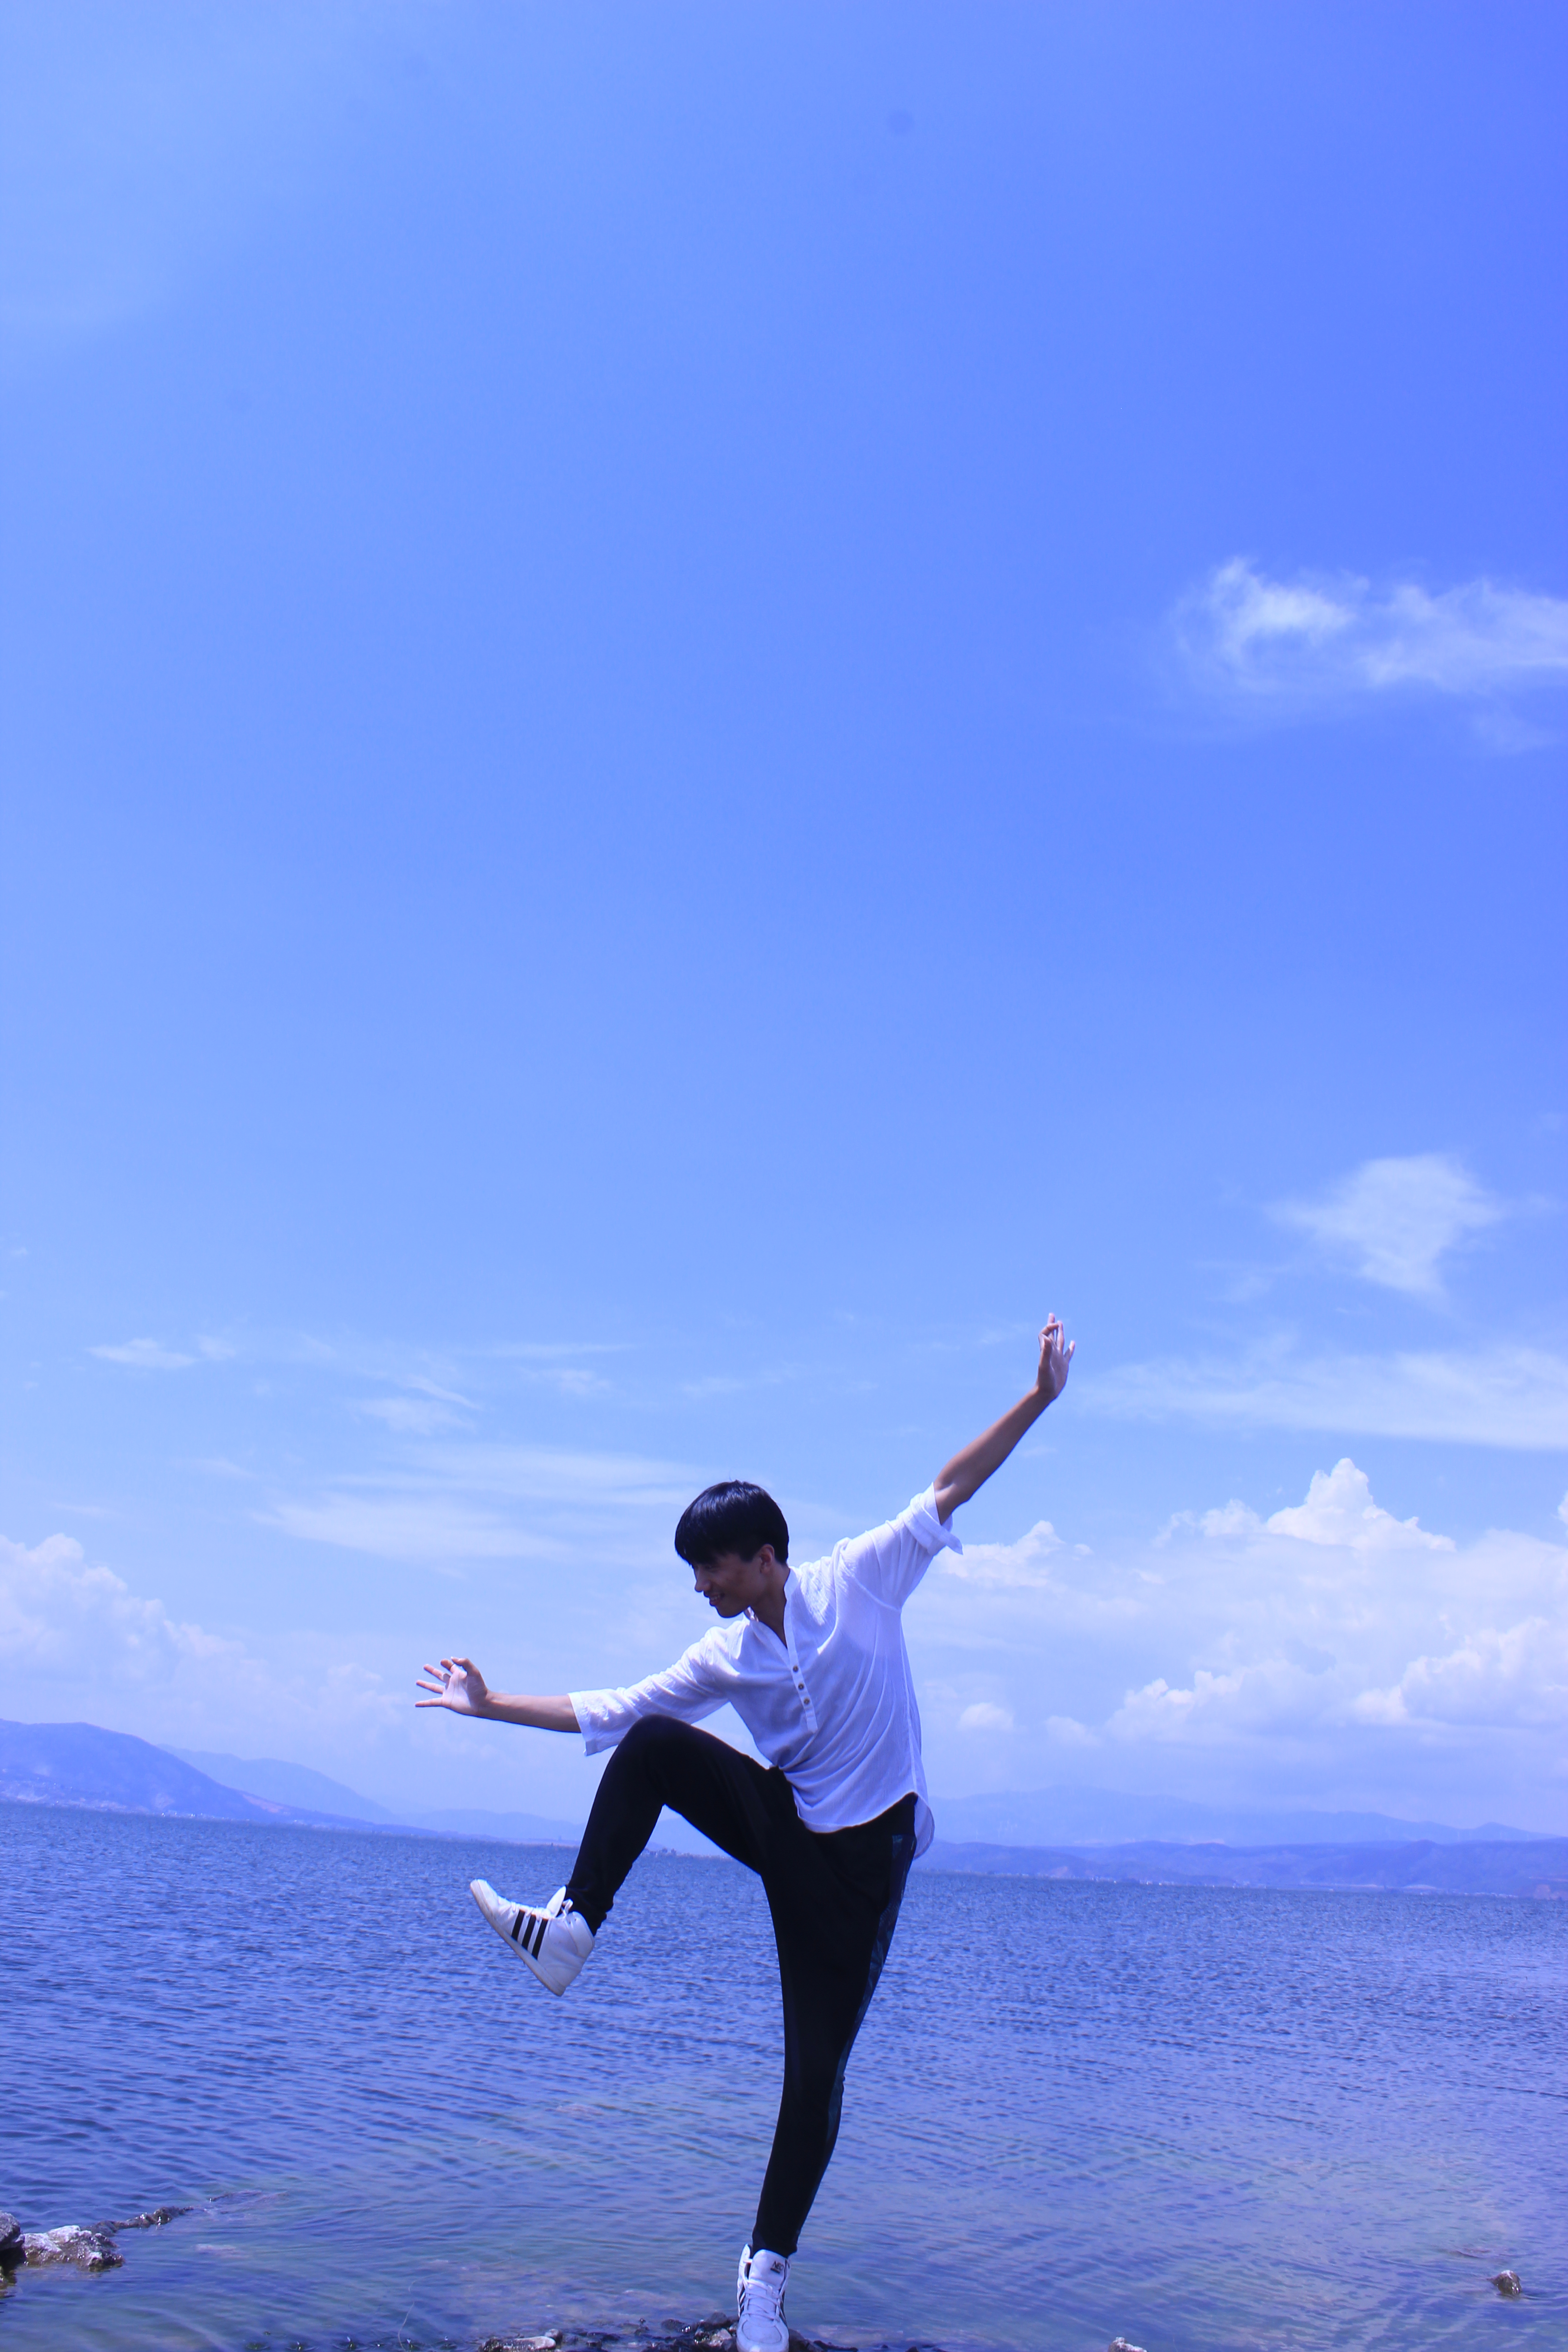 Sulong in dance pose at Erhai Sea in Yunnan